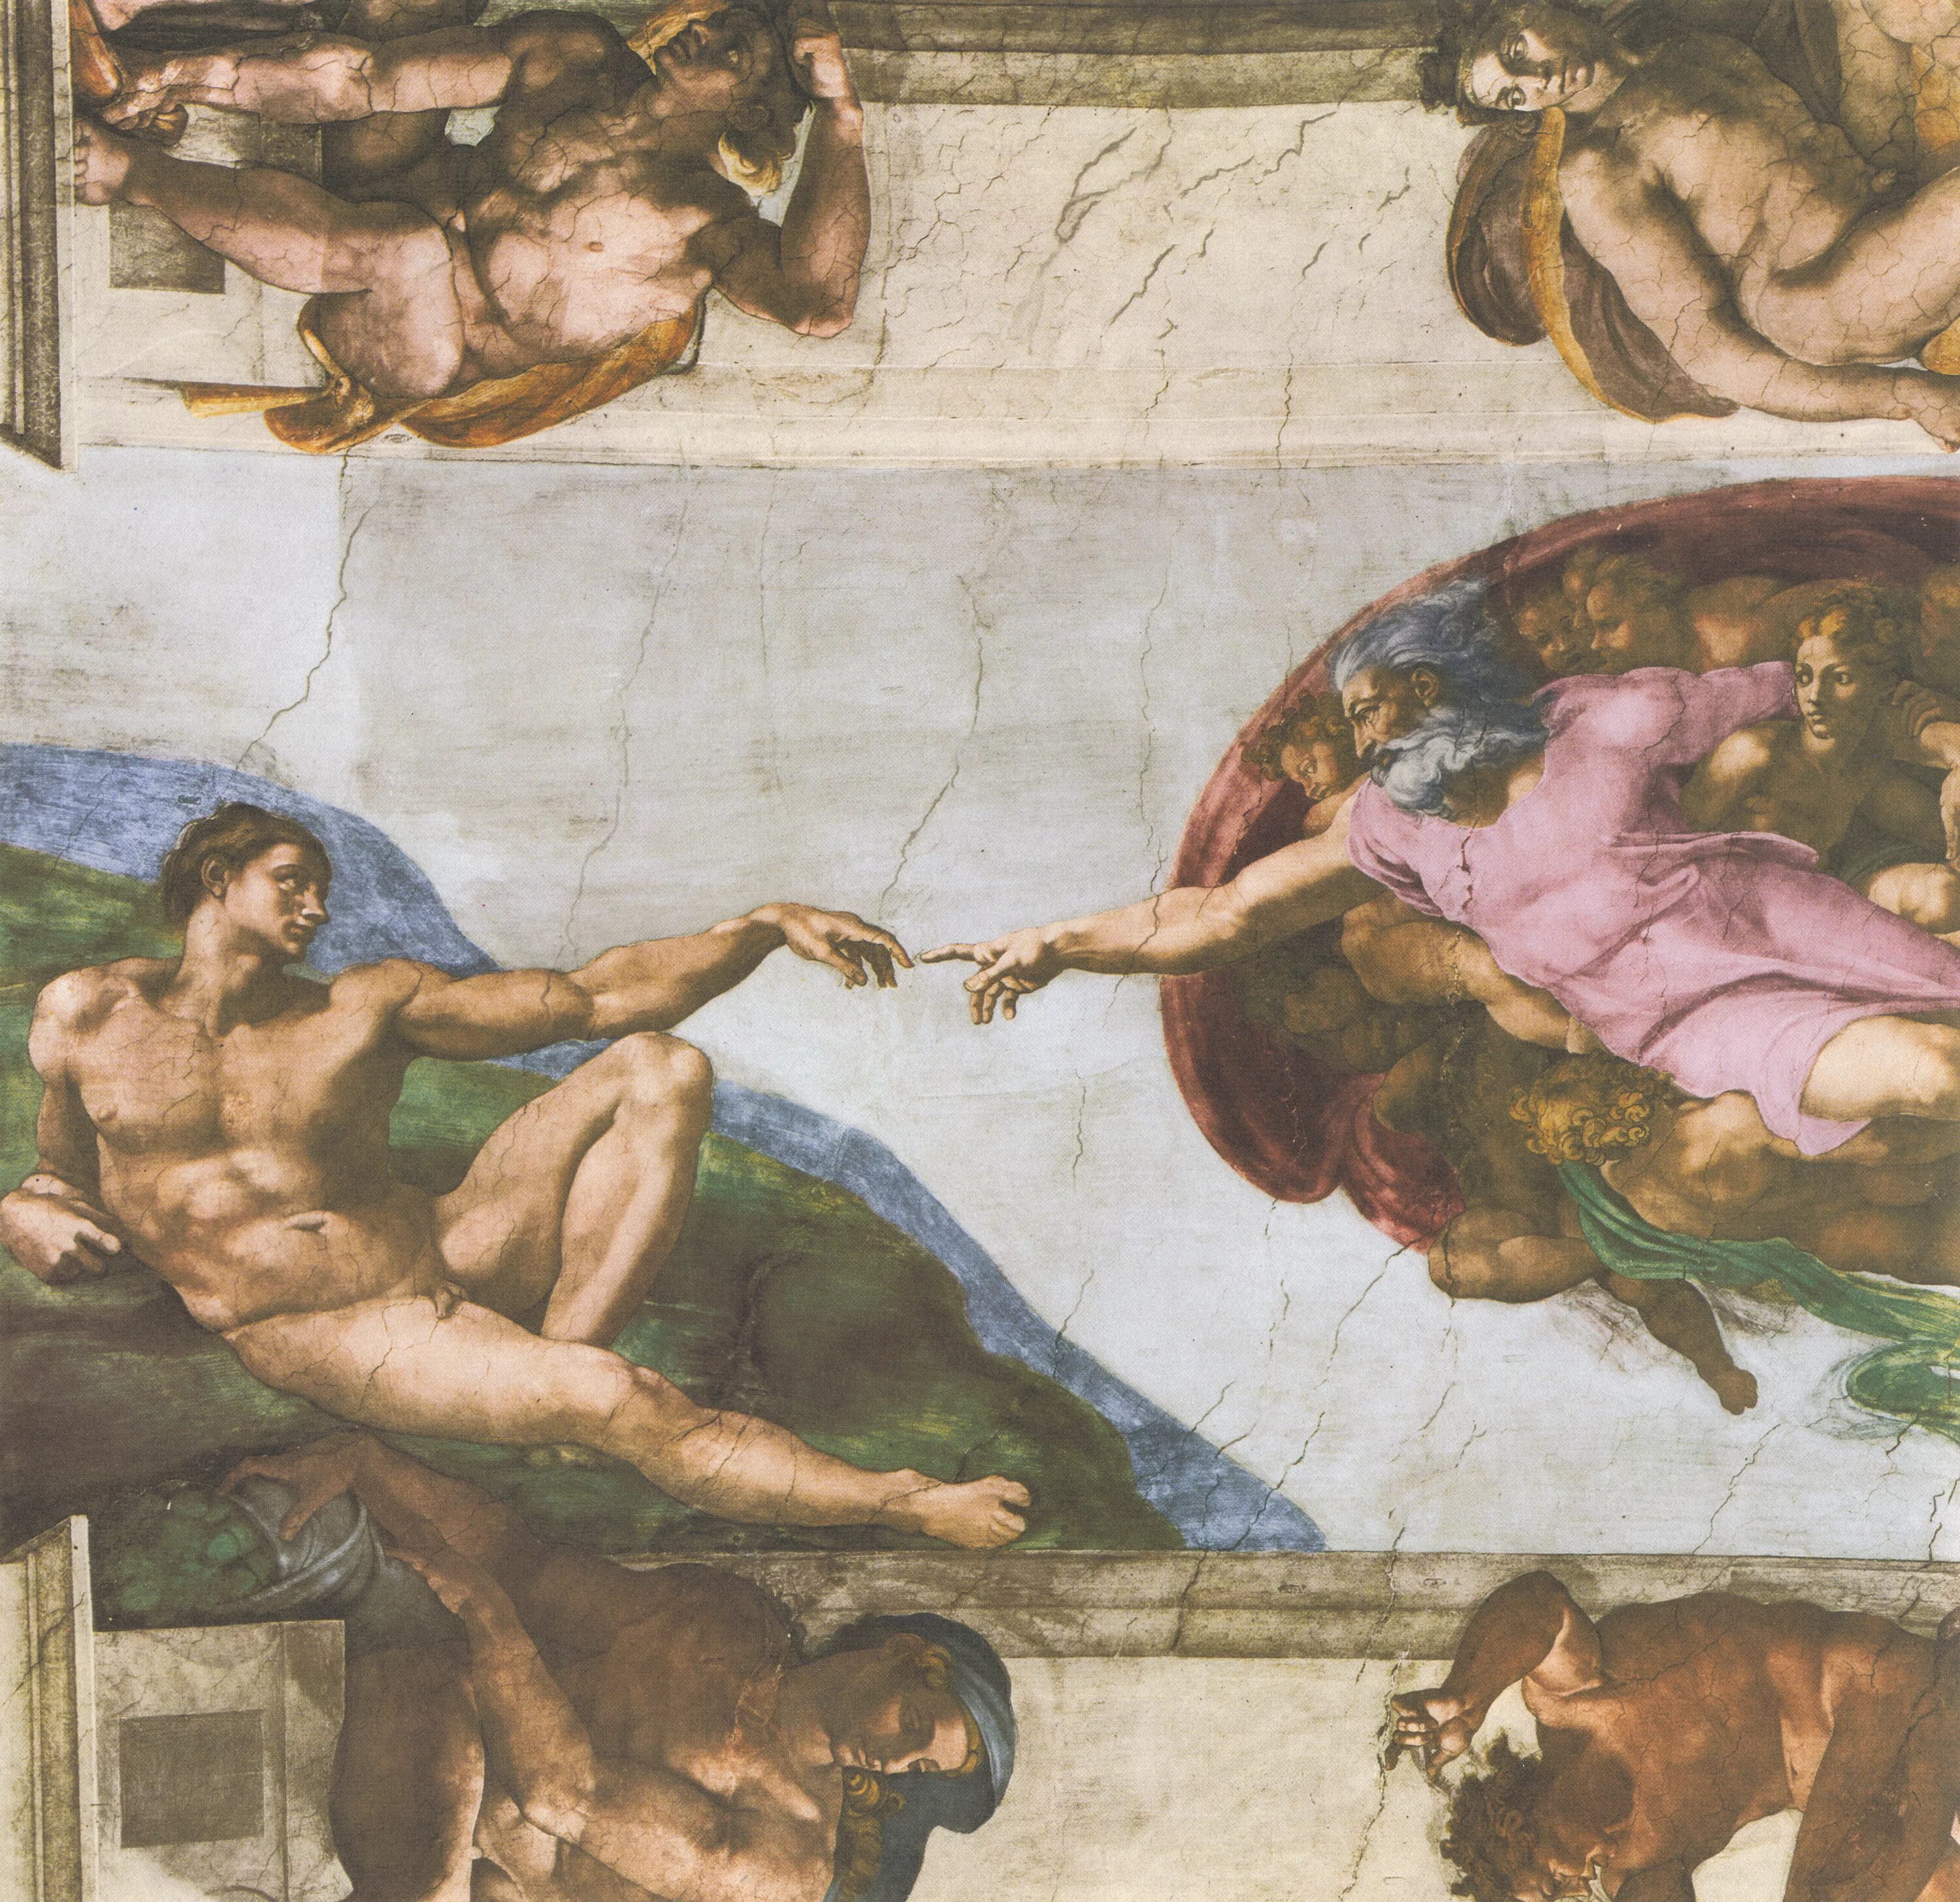 Какая картина считается проклятой. Микеланджело фрески Сикстинской капеллы. Микеланджело потолок Сикстинской капеллы ФРАГМЕНТЫ. Фреска на потолке Сикстинской капеллы.